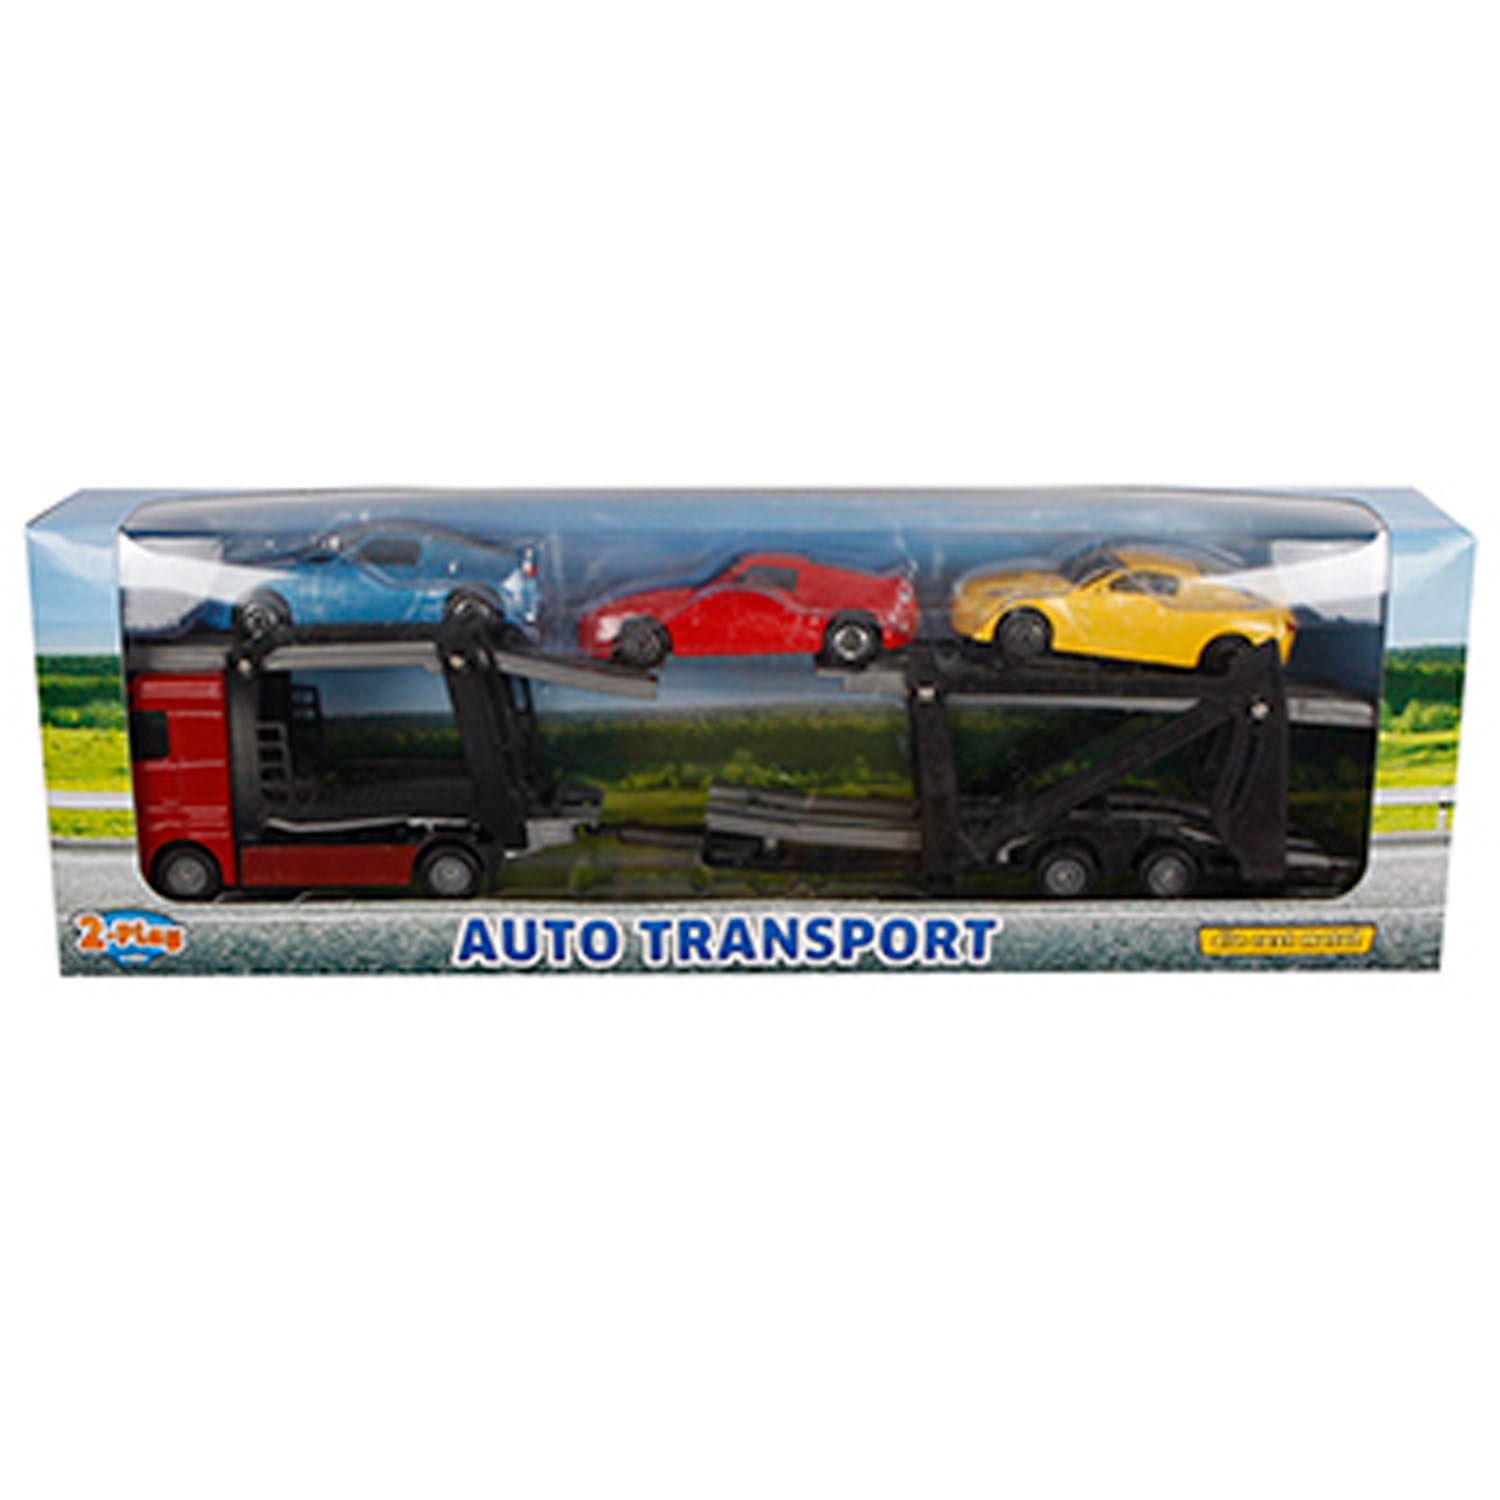 2-Play Die-cast Vrachtwagen Transporter Auto's, 26cm | Thimble Toys